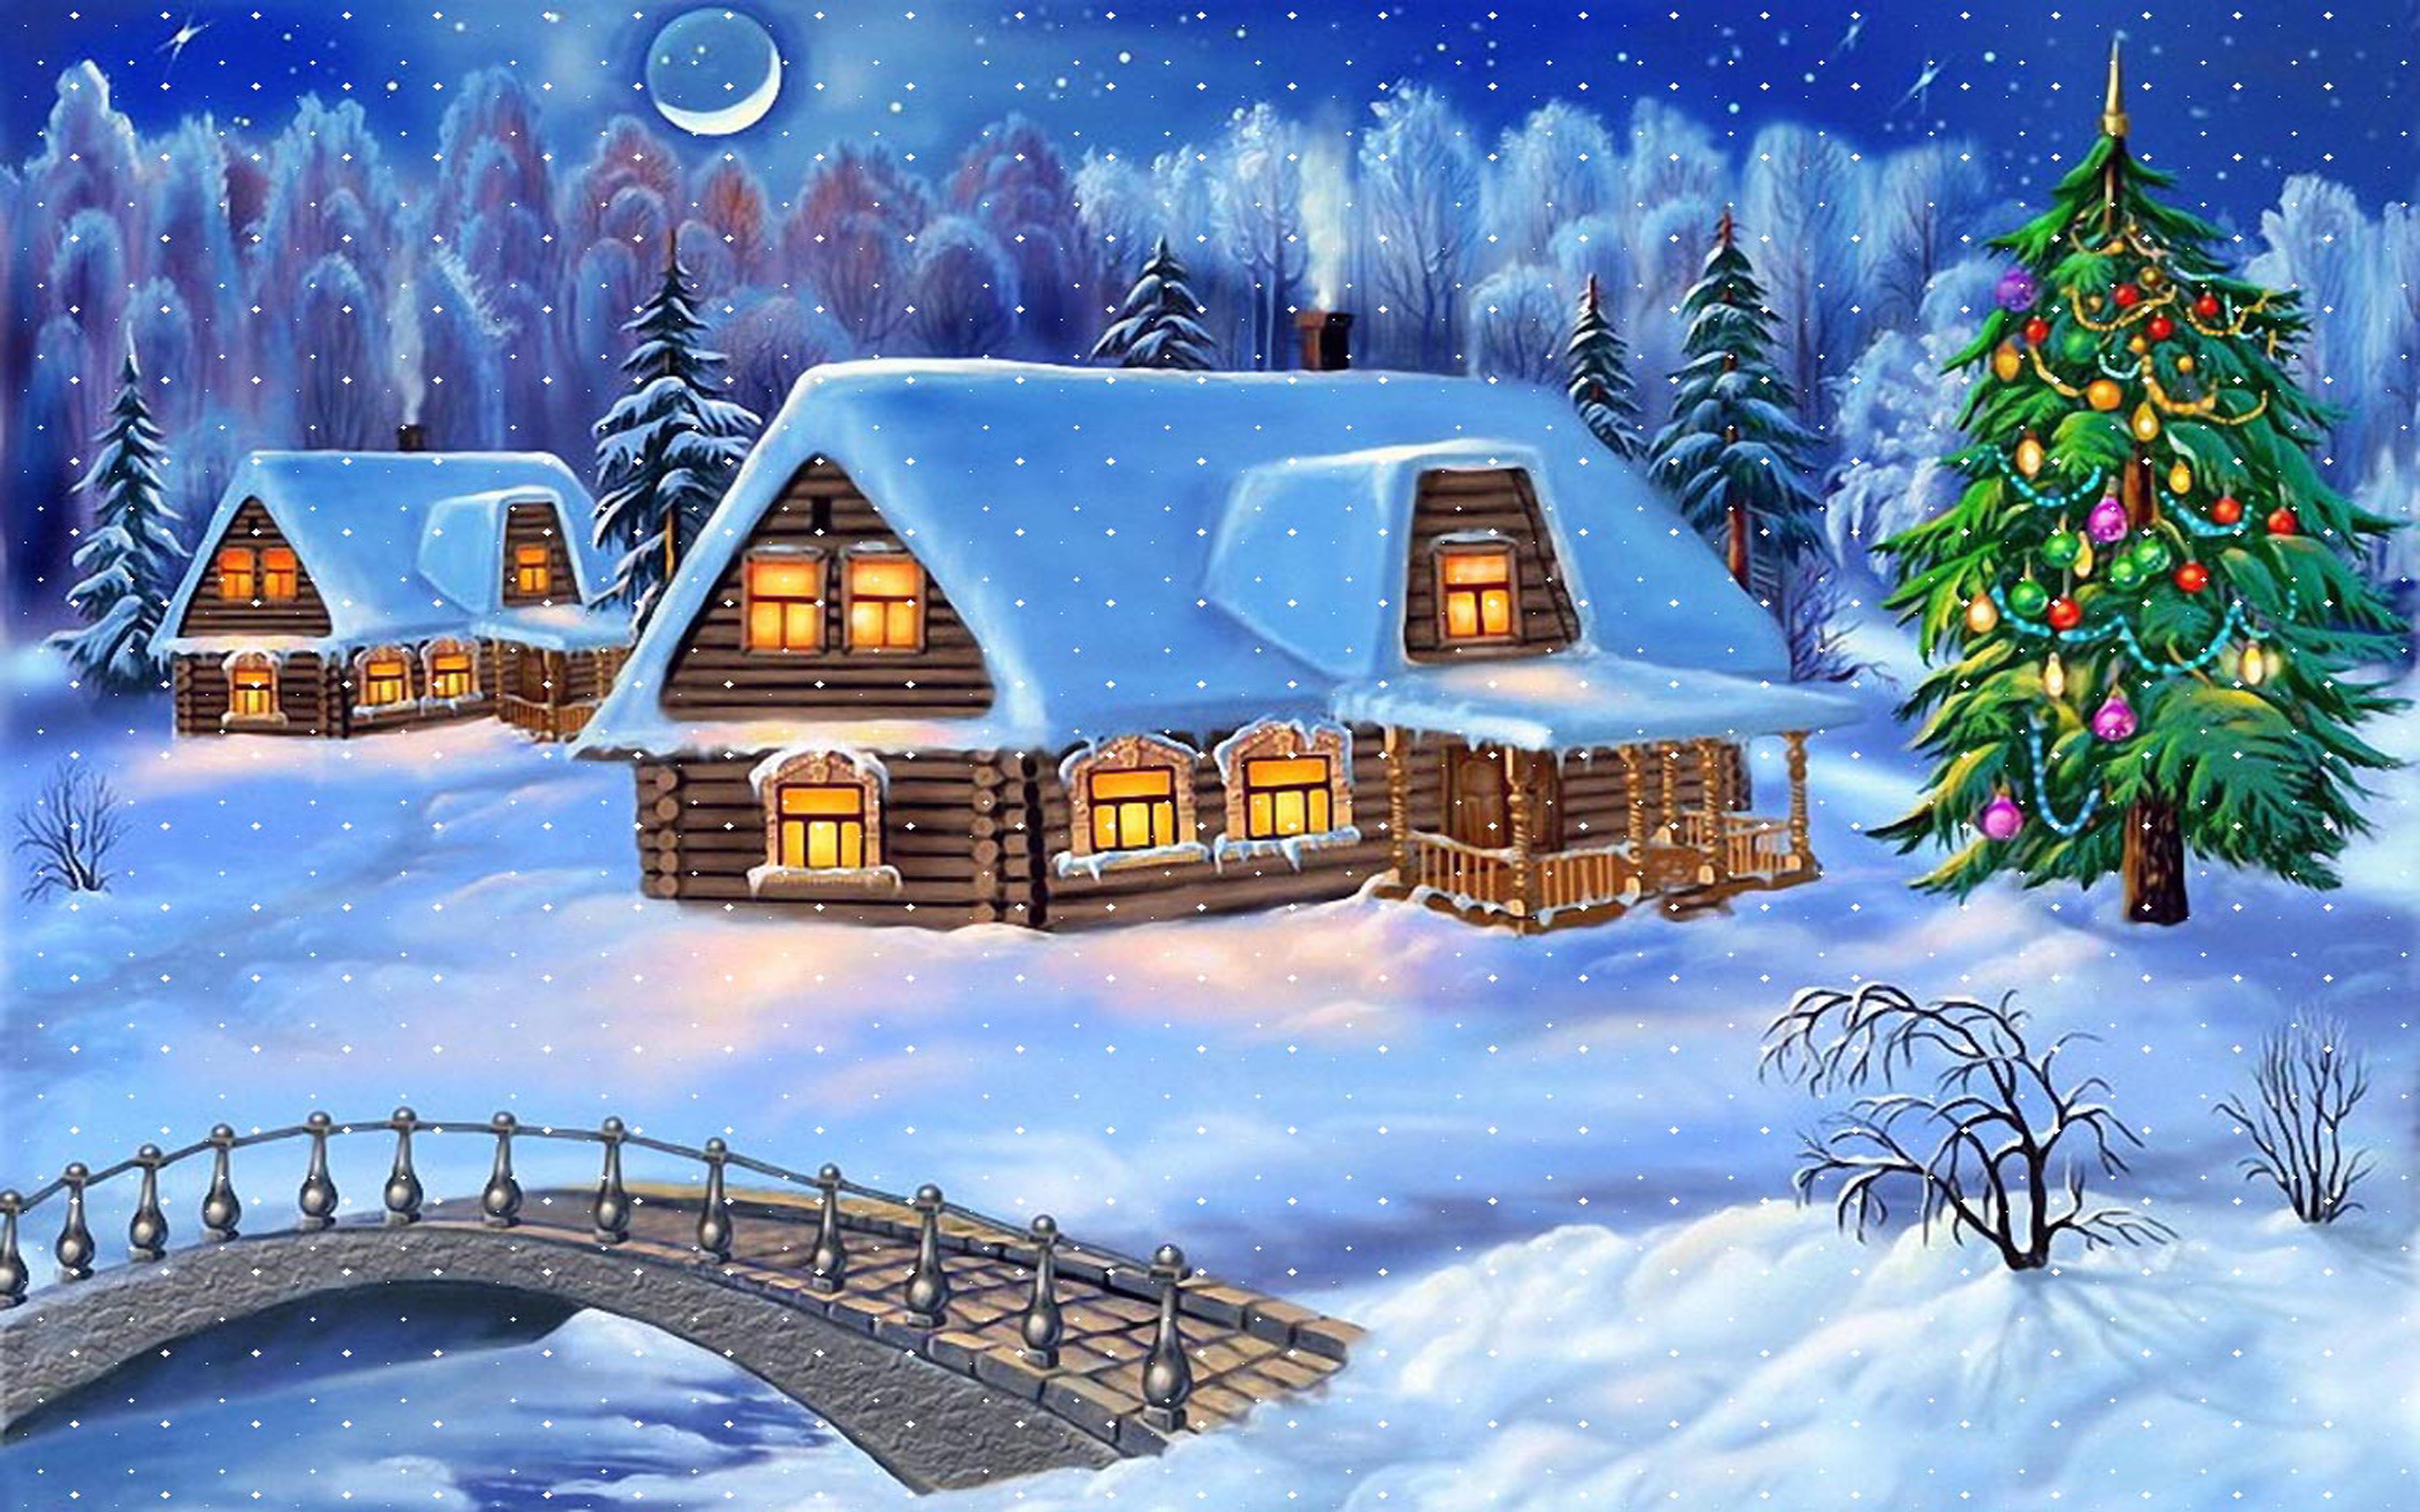 Happy New Year Christmas Tree Winter Village Houses Wooden Bridge Snow